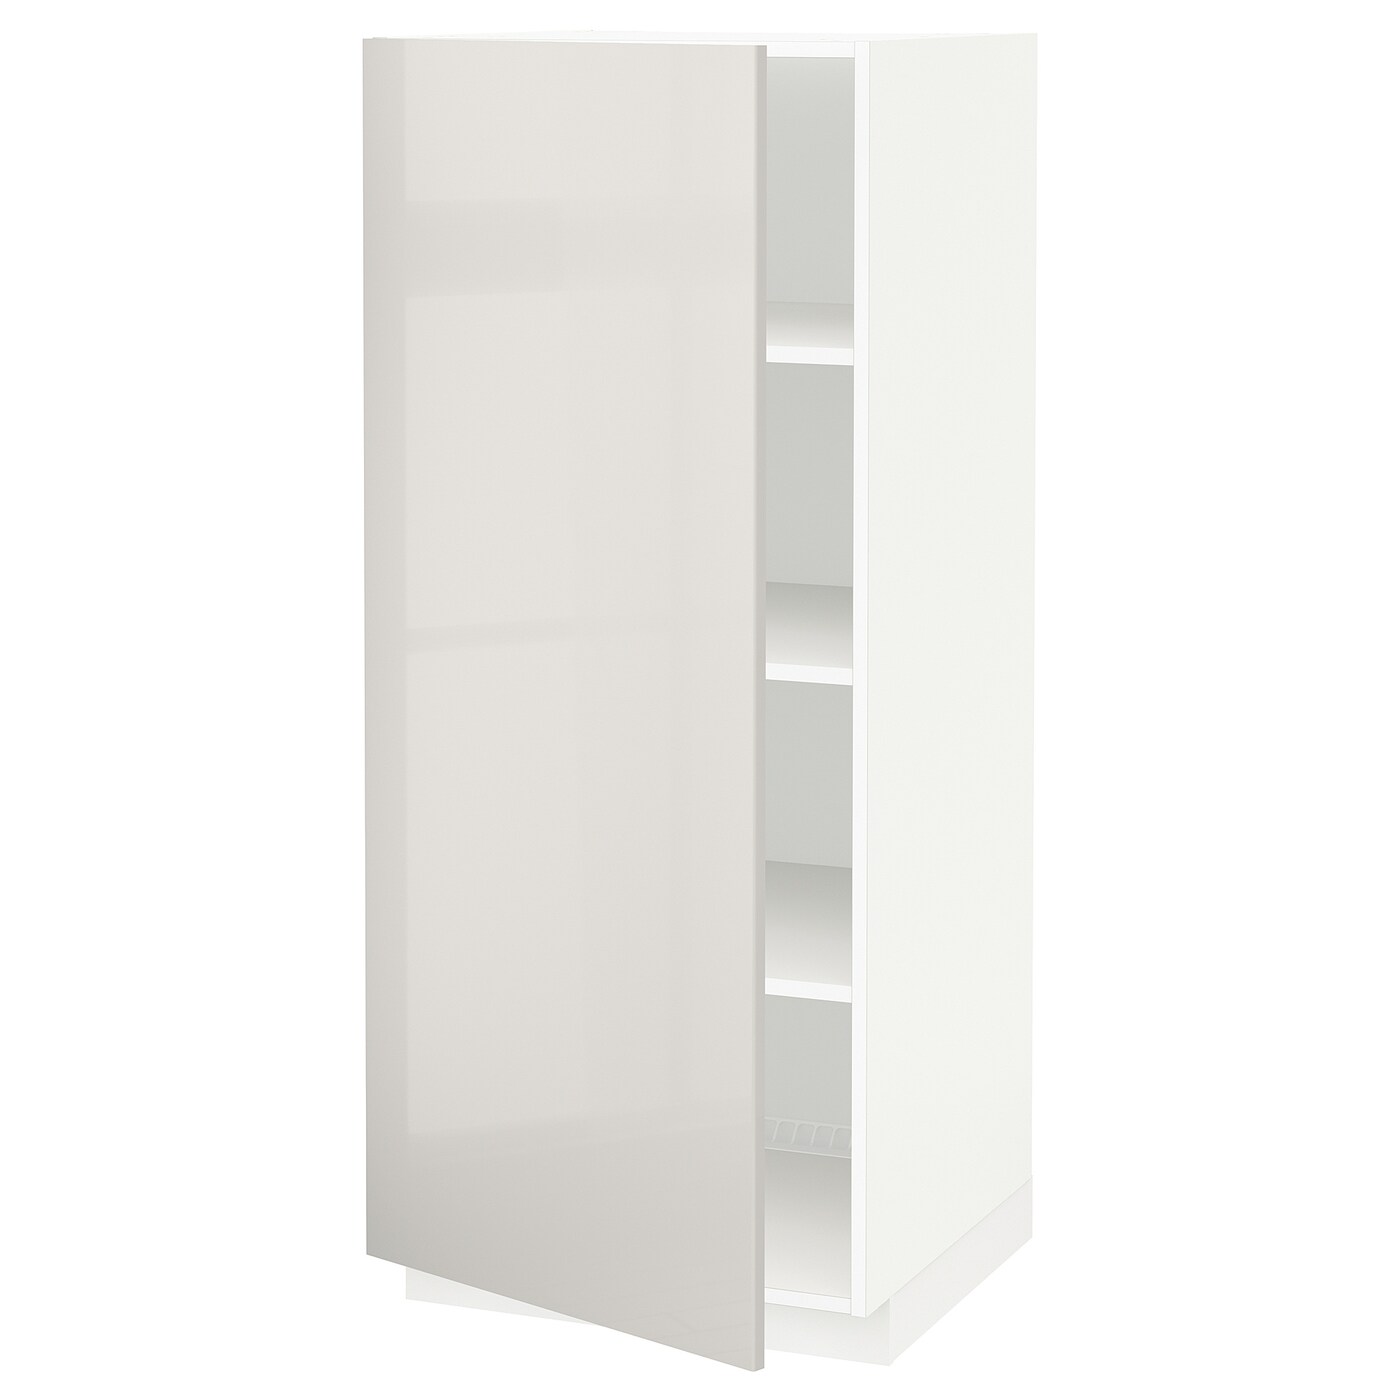 Напольный кухонный шкаф с полками - IKEA METOD/МЕТОД ИКЕА, 140х60х60 см, белый/светло-серый глянцевый